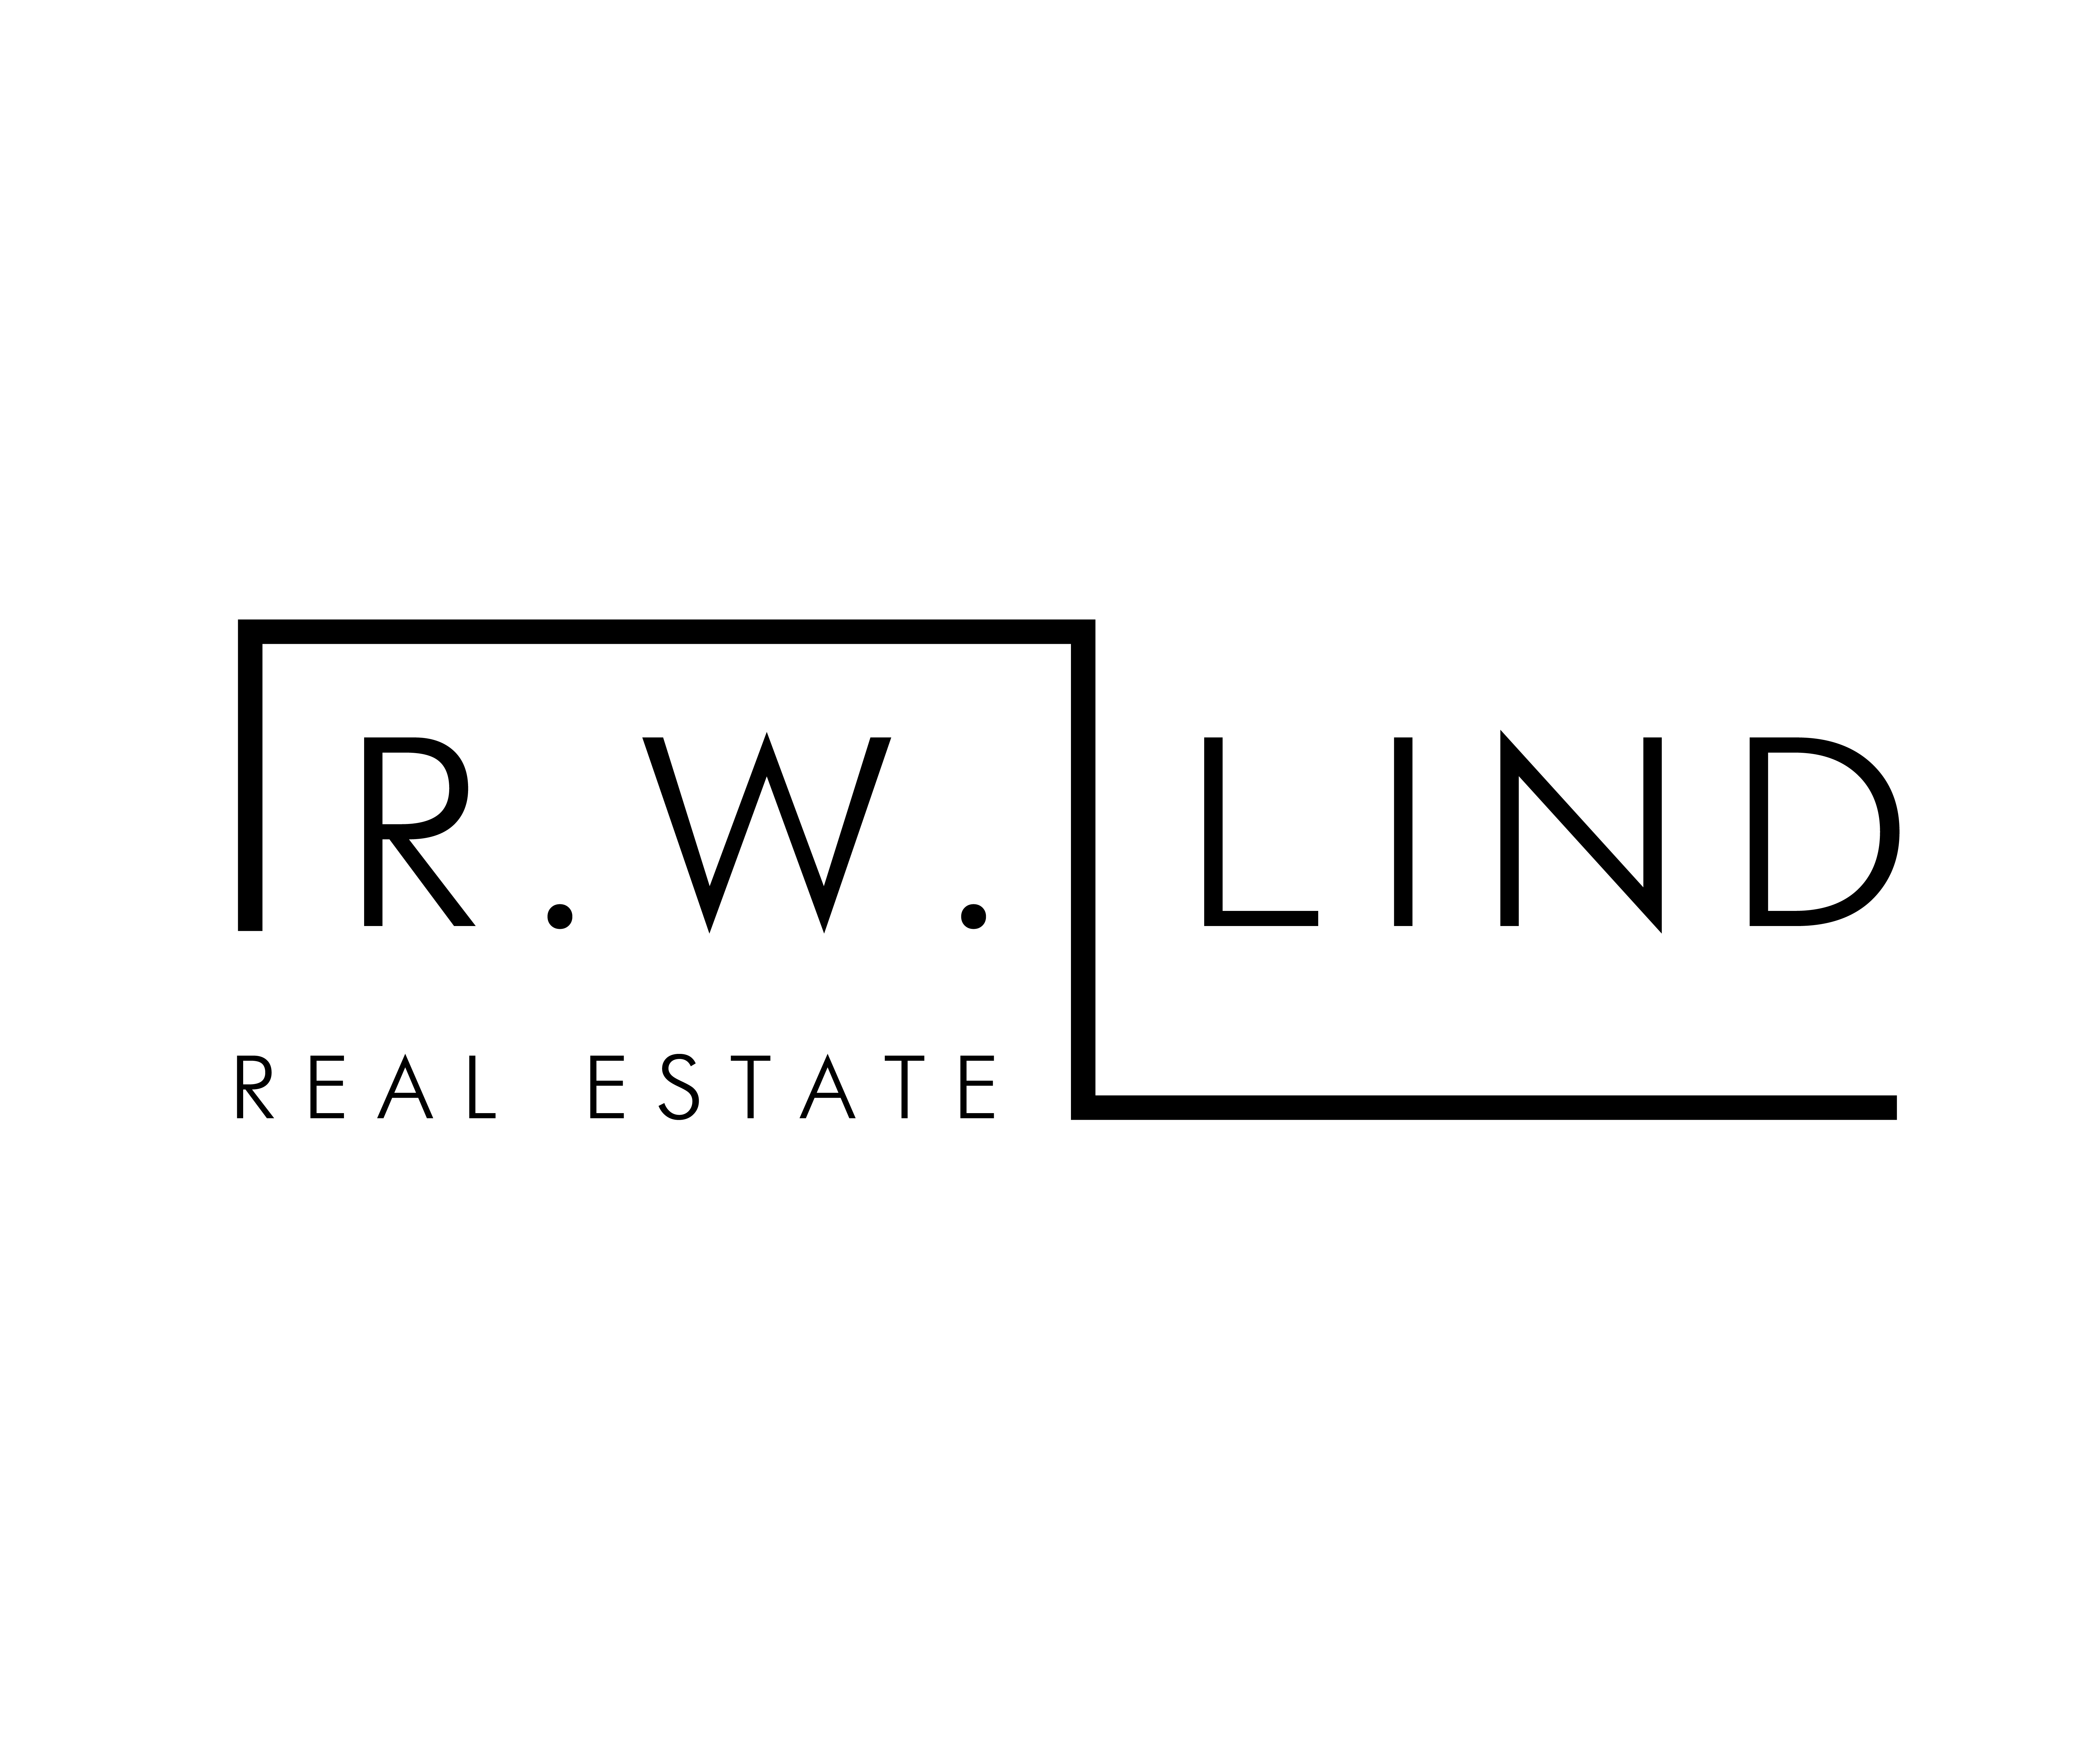 R.W. Lind Real Estate Inc.